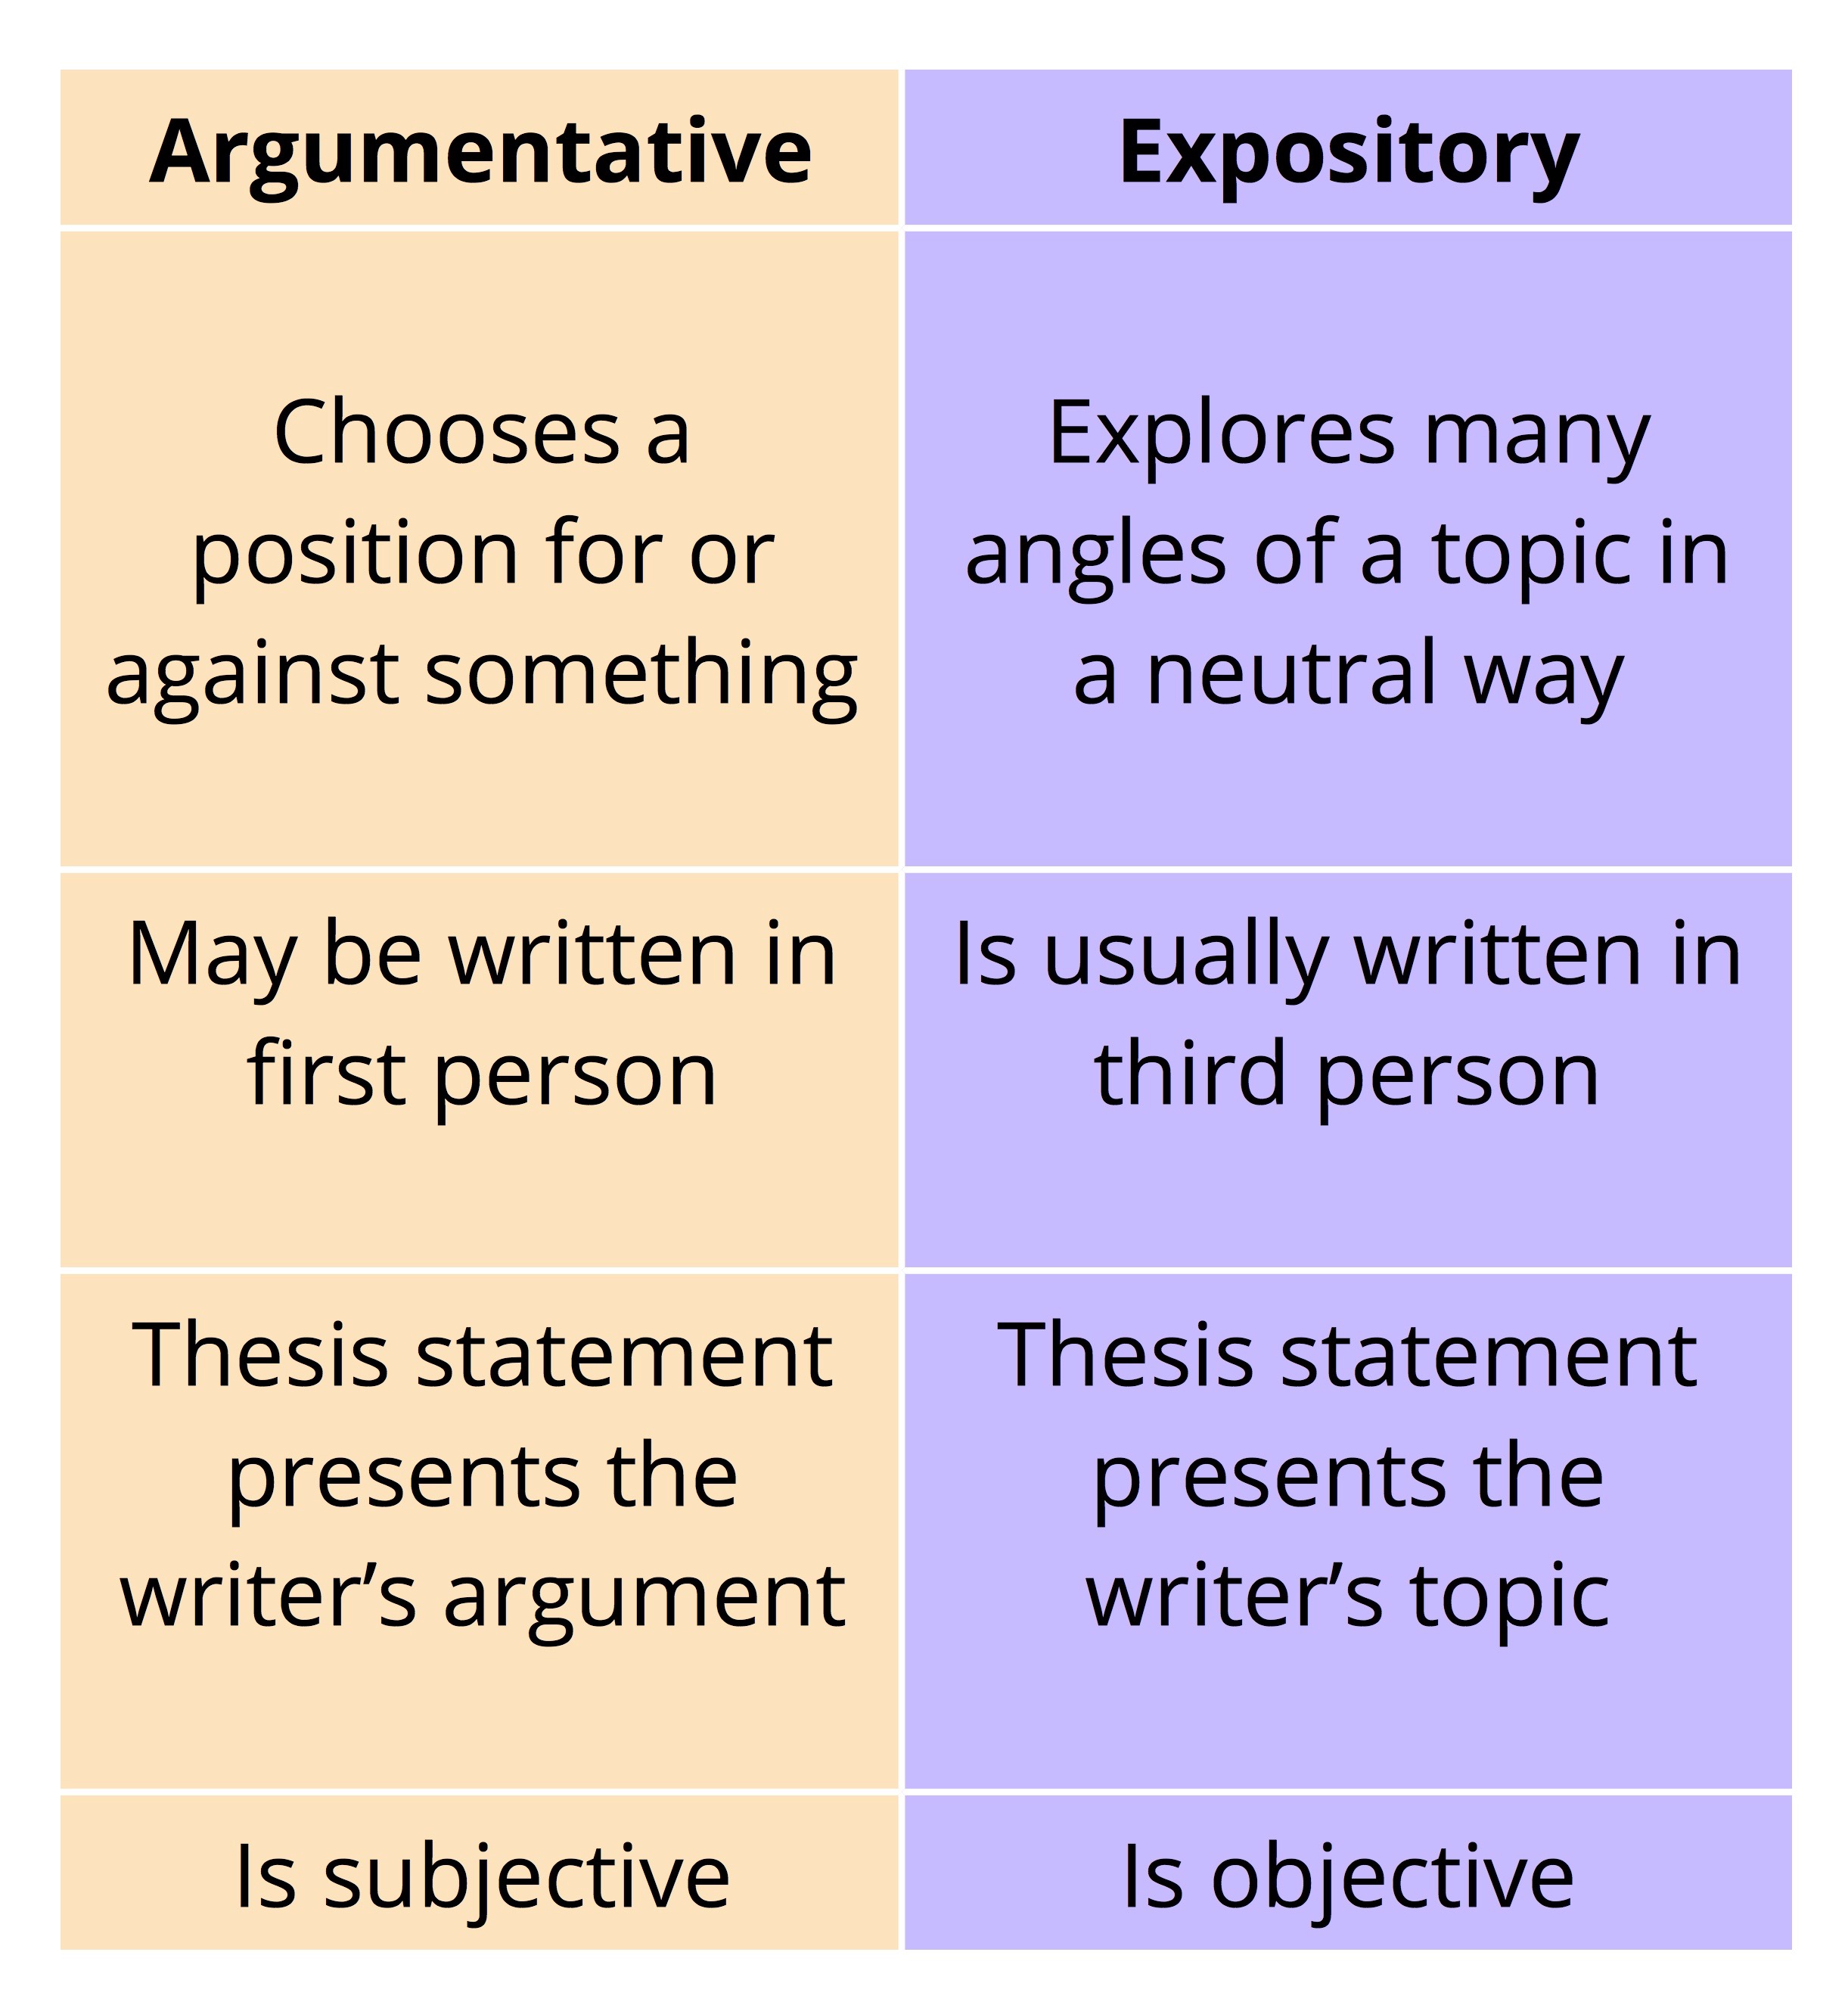 Expository vs Argumentative essay